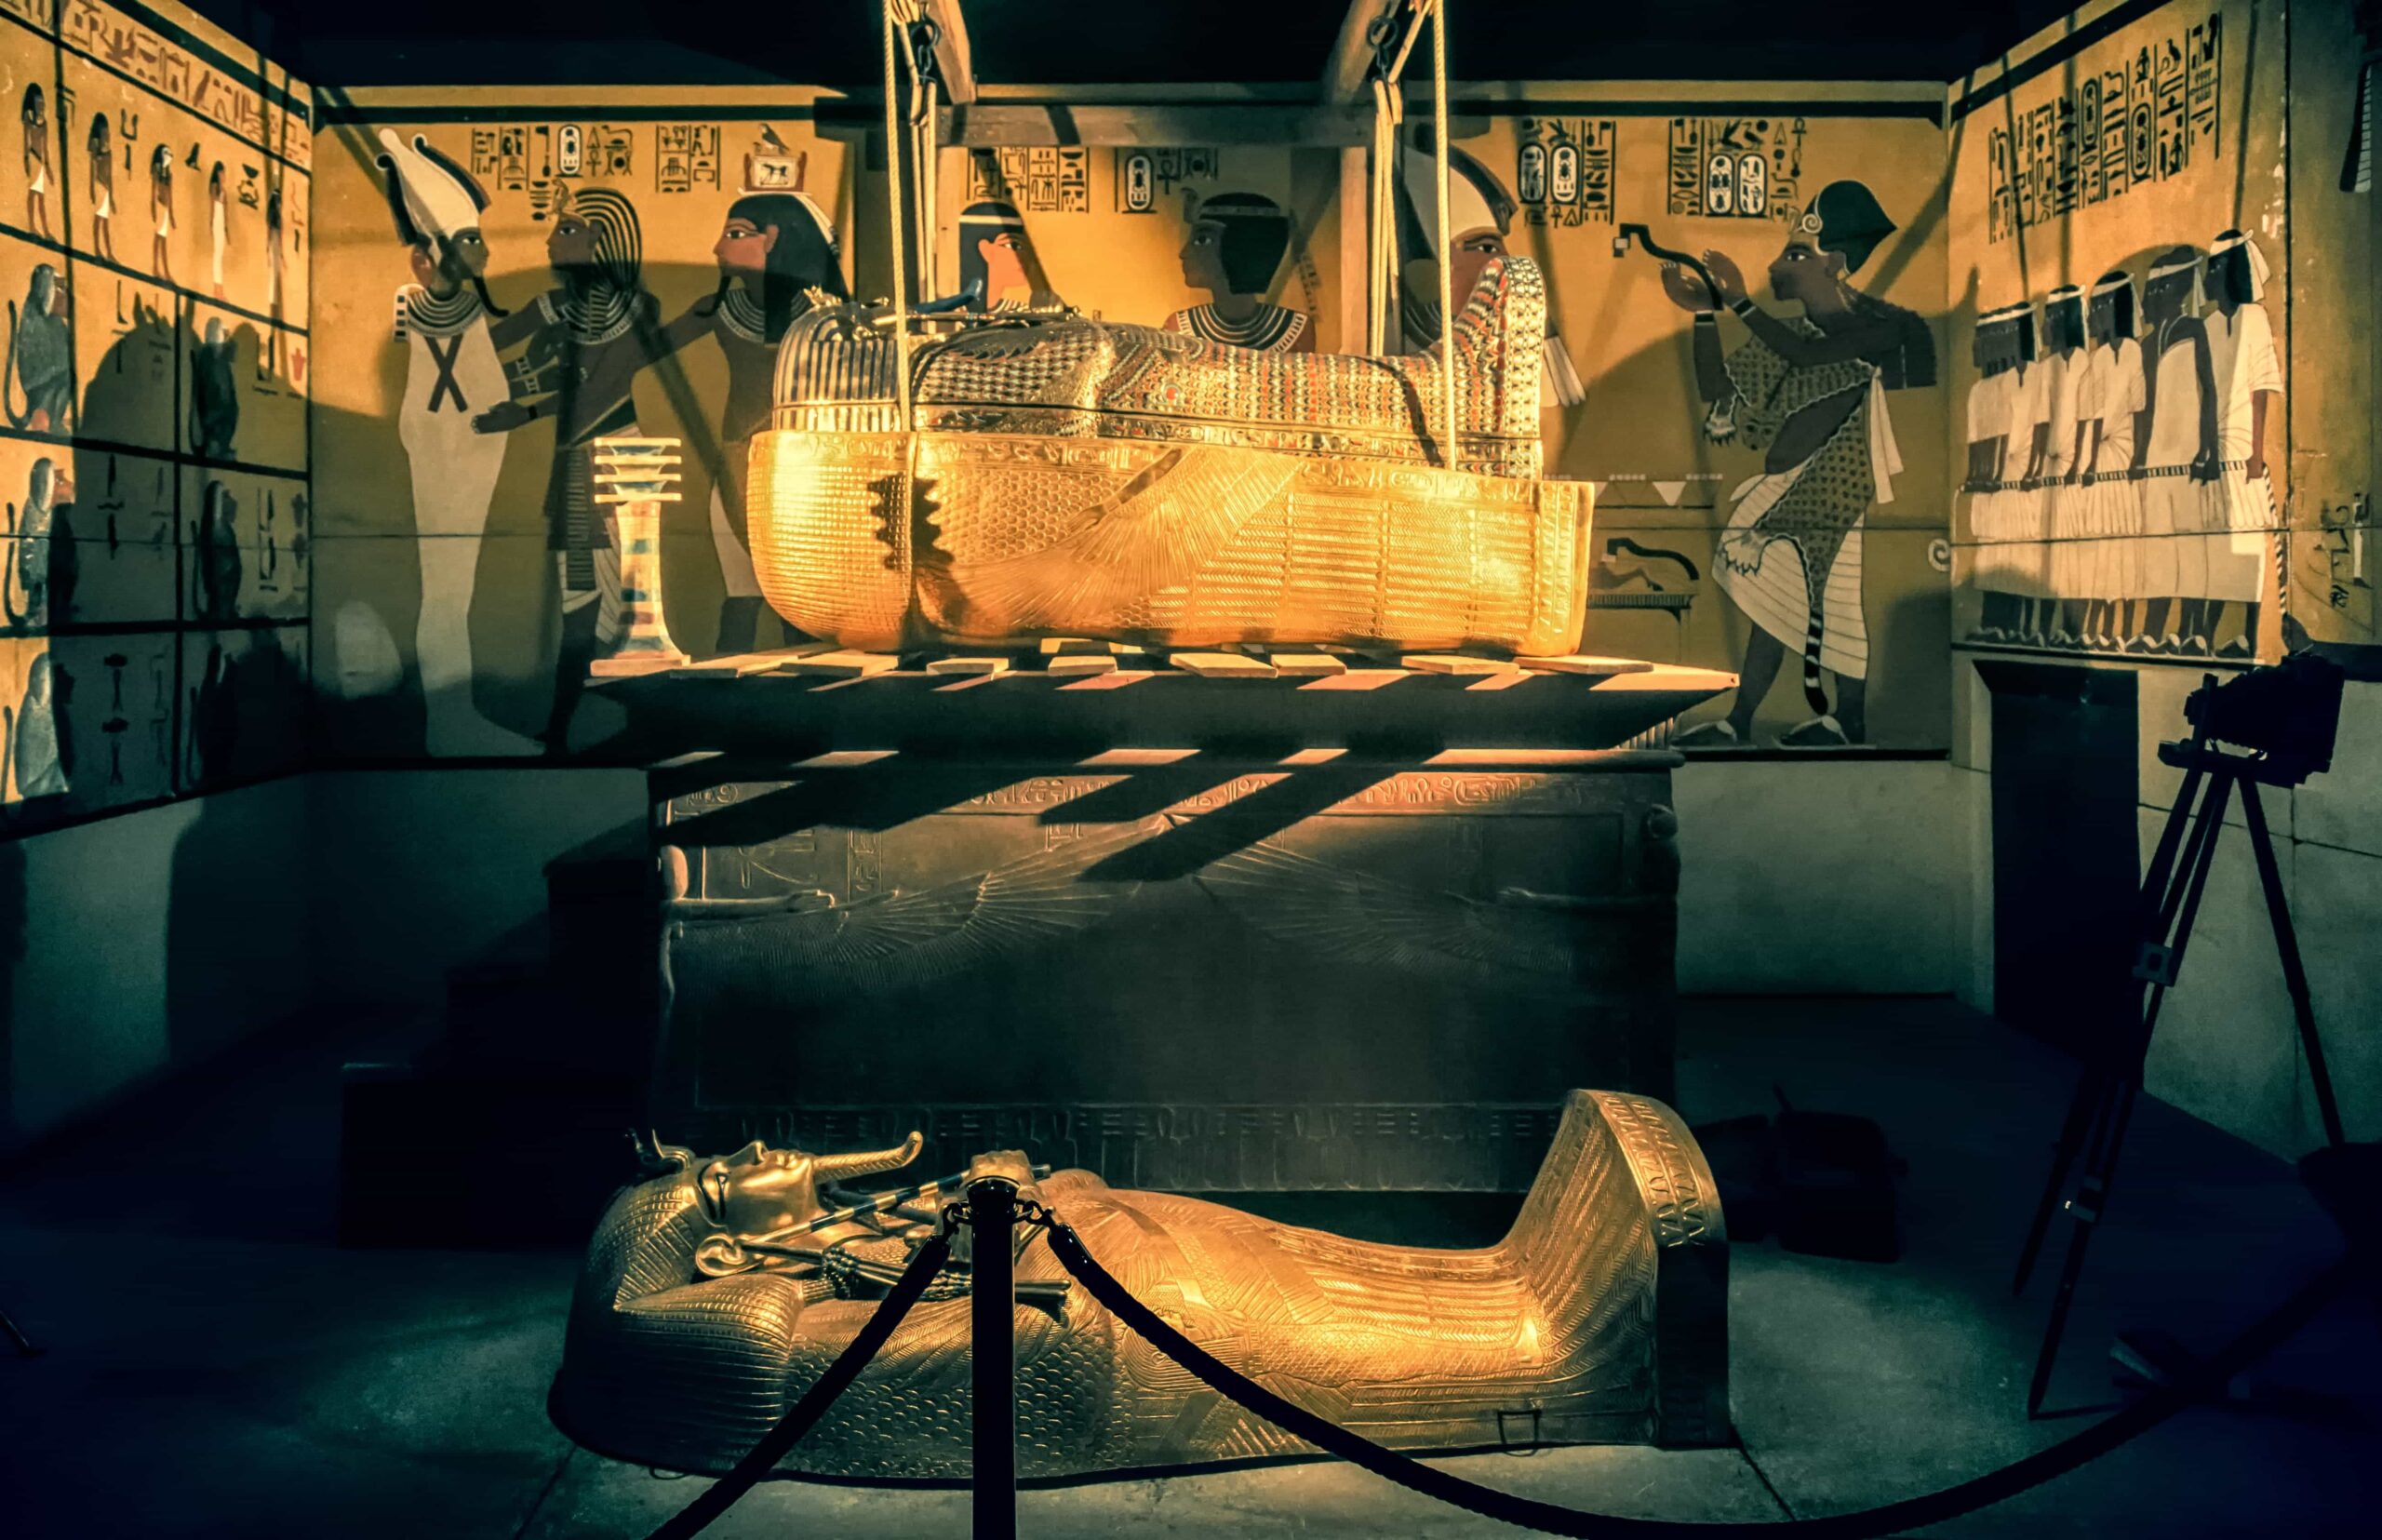 Tutankhamun's Tomb and Treasures